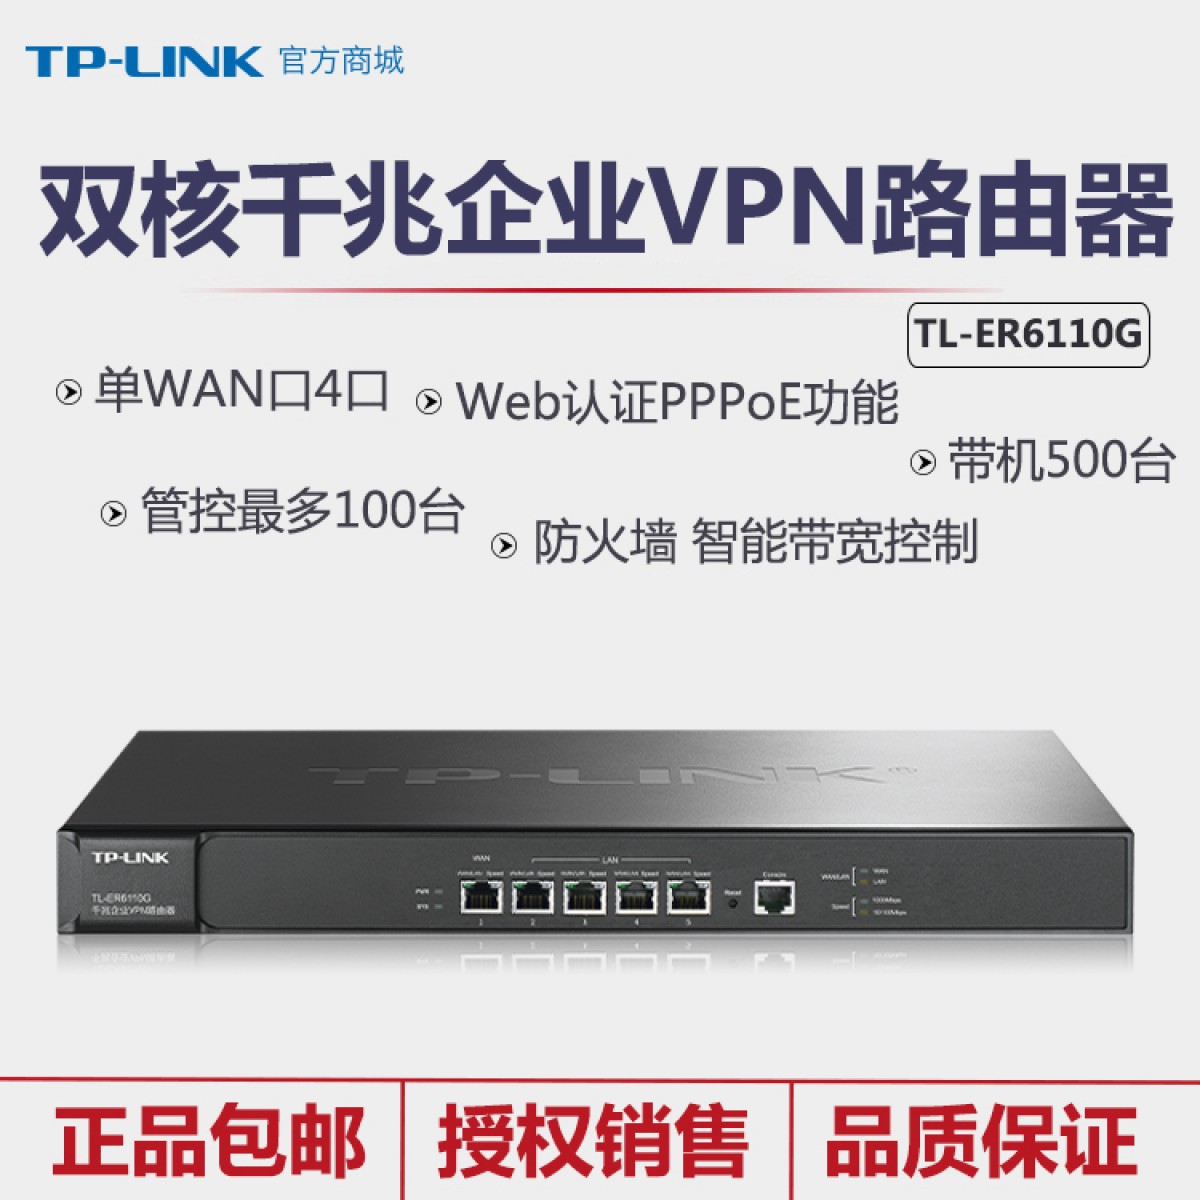 TP-LINK TL-ER6110G双核千兆企业VPN路由器内置AC防火墙WEB/PPPoE